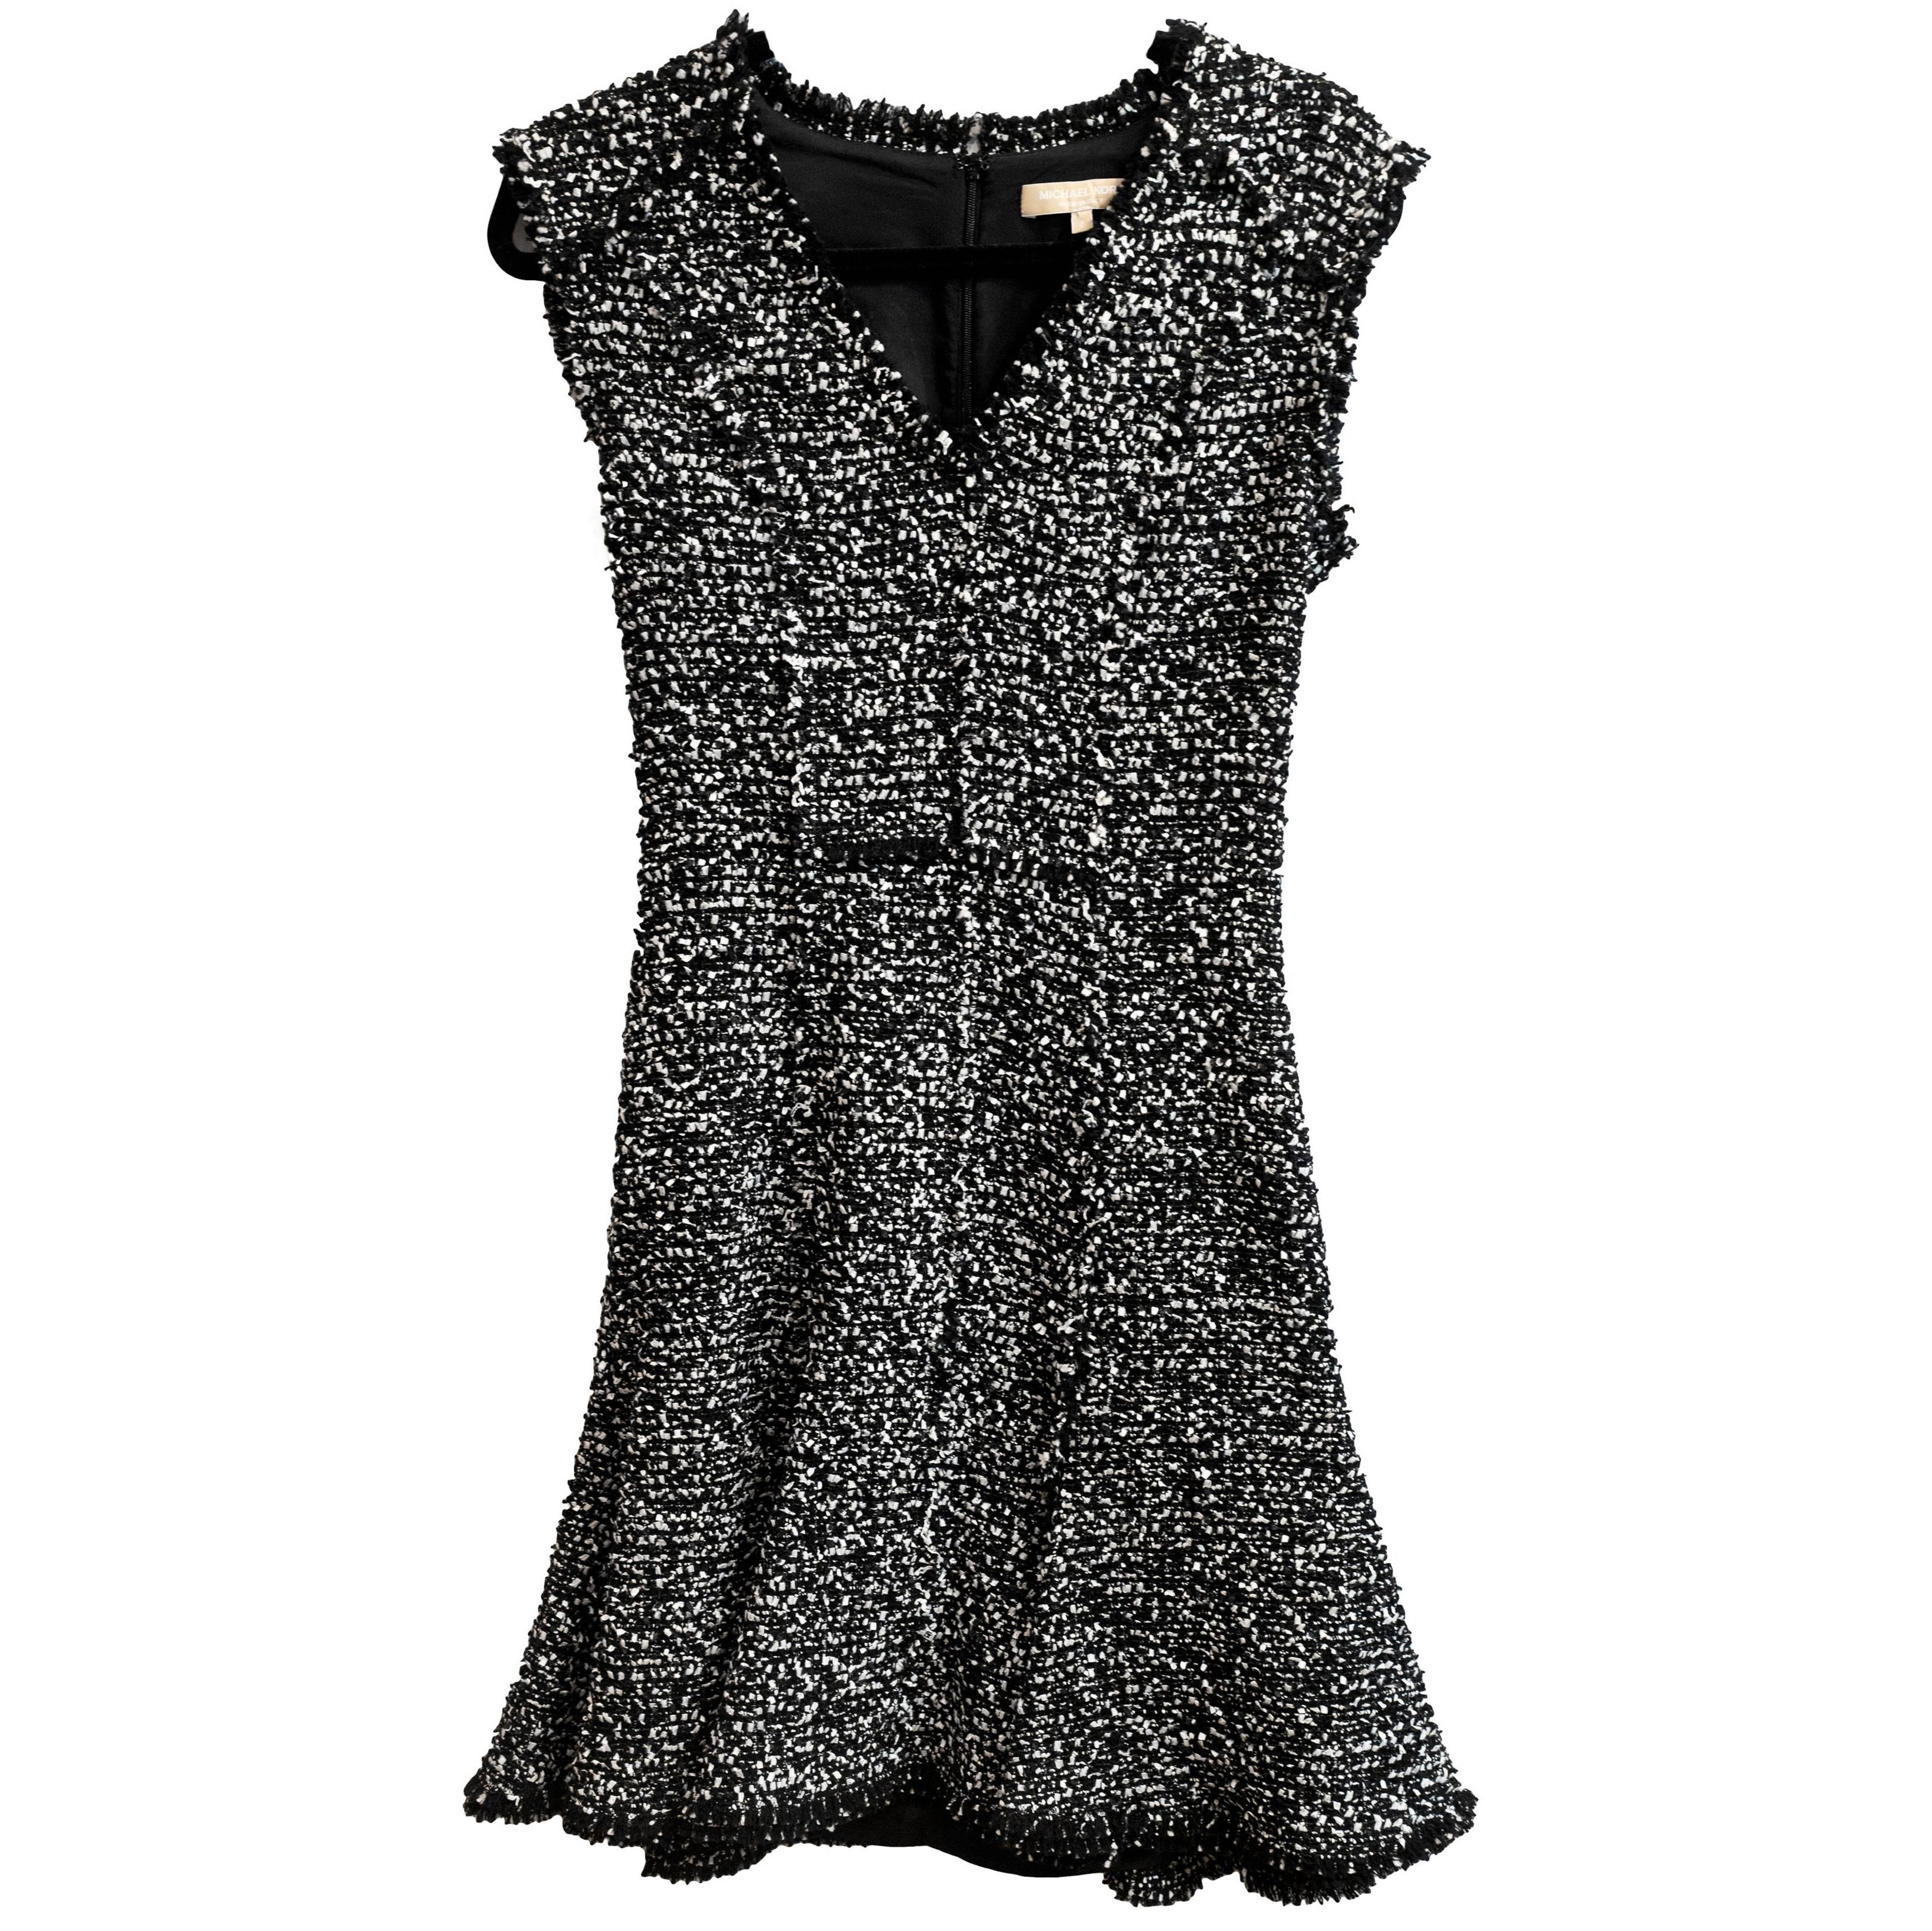 Michael Kors Black & White Tweed Sleeveless Dress Sz 2